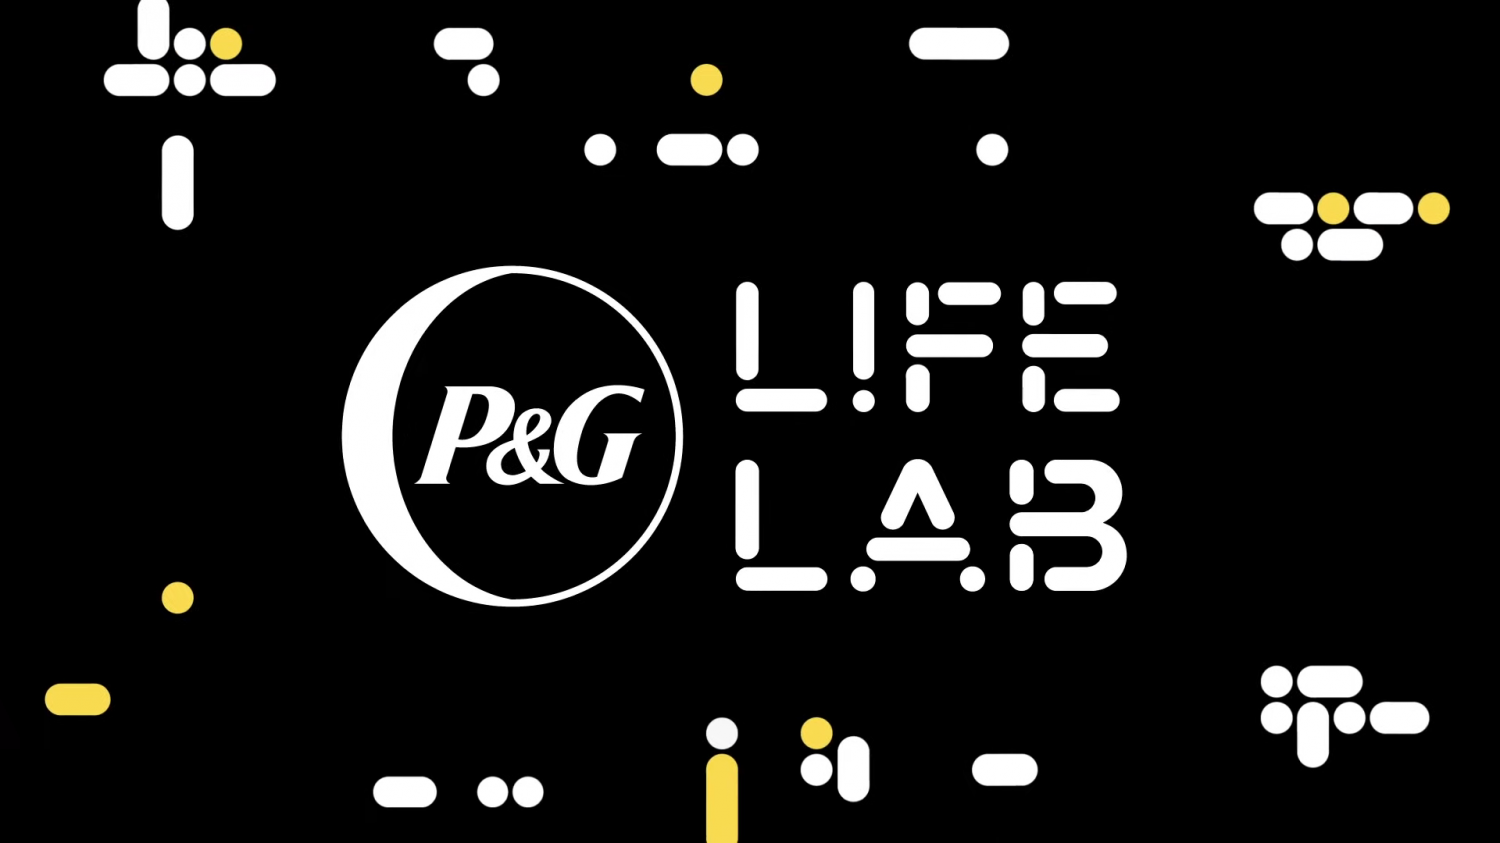 Procter and Gamble's lifelab metaverse concept 